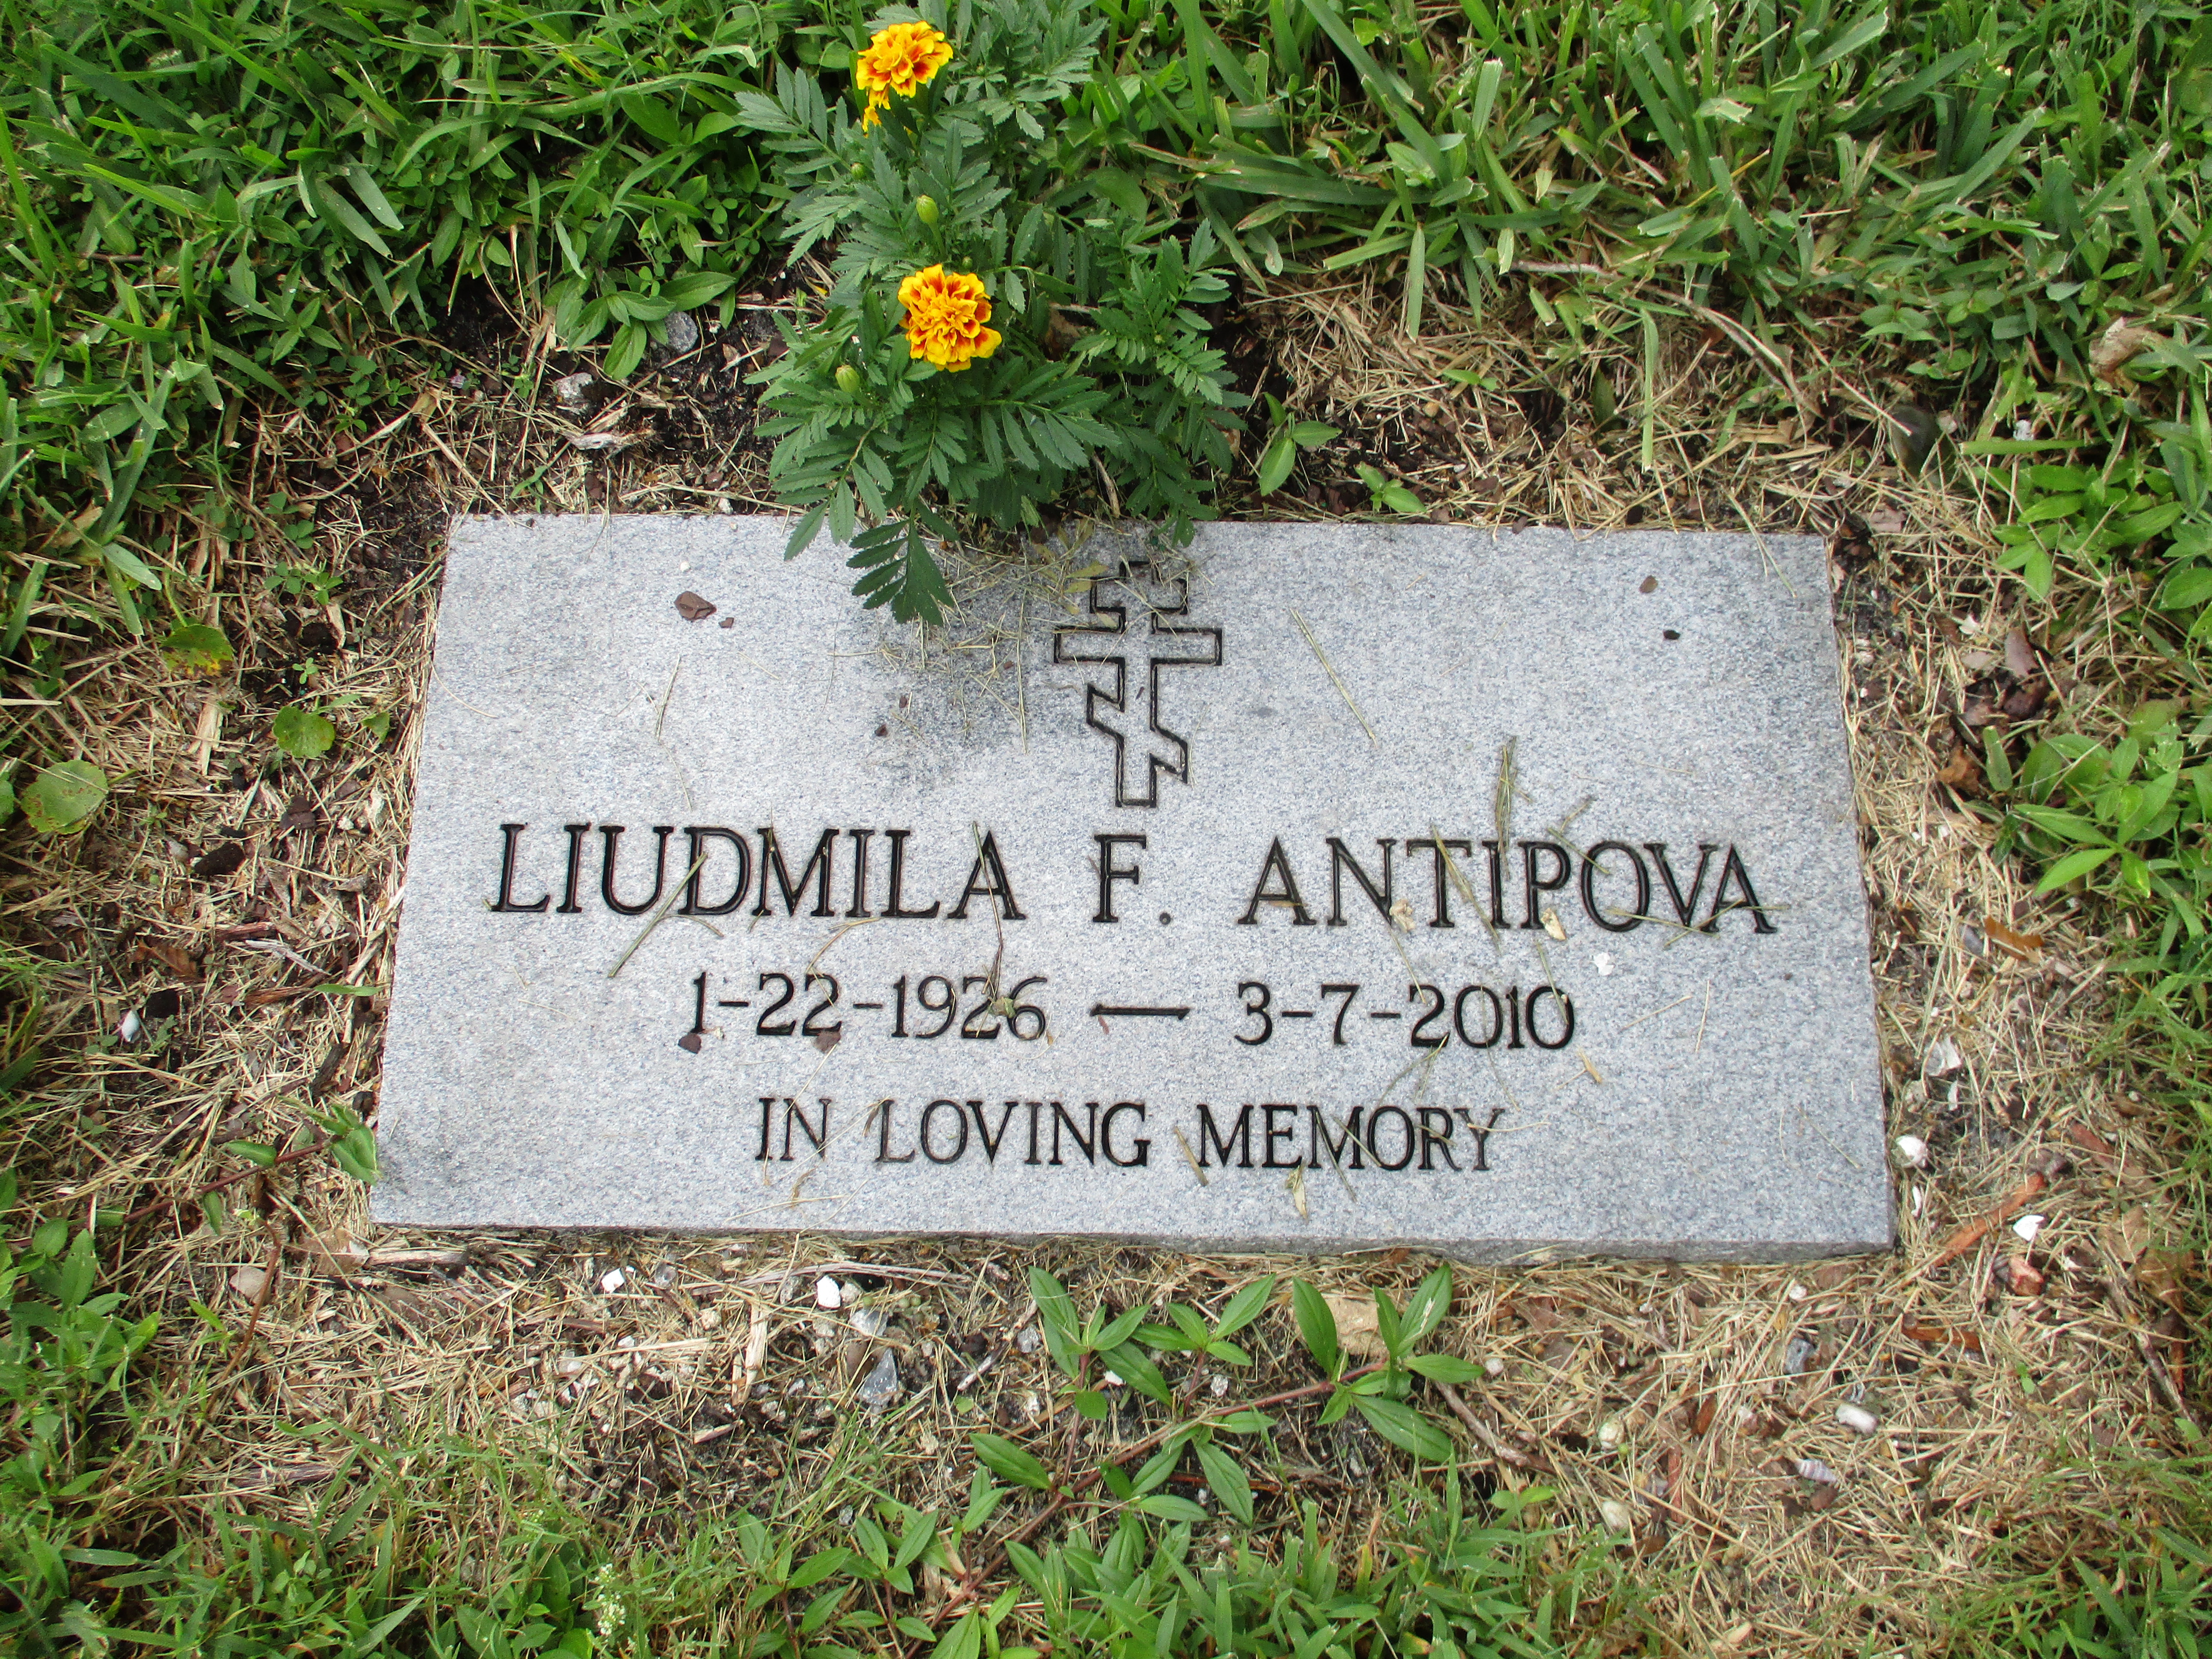 Liudmila F Antipova